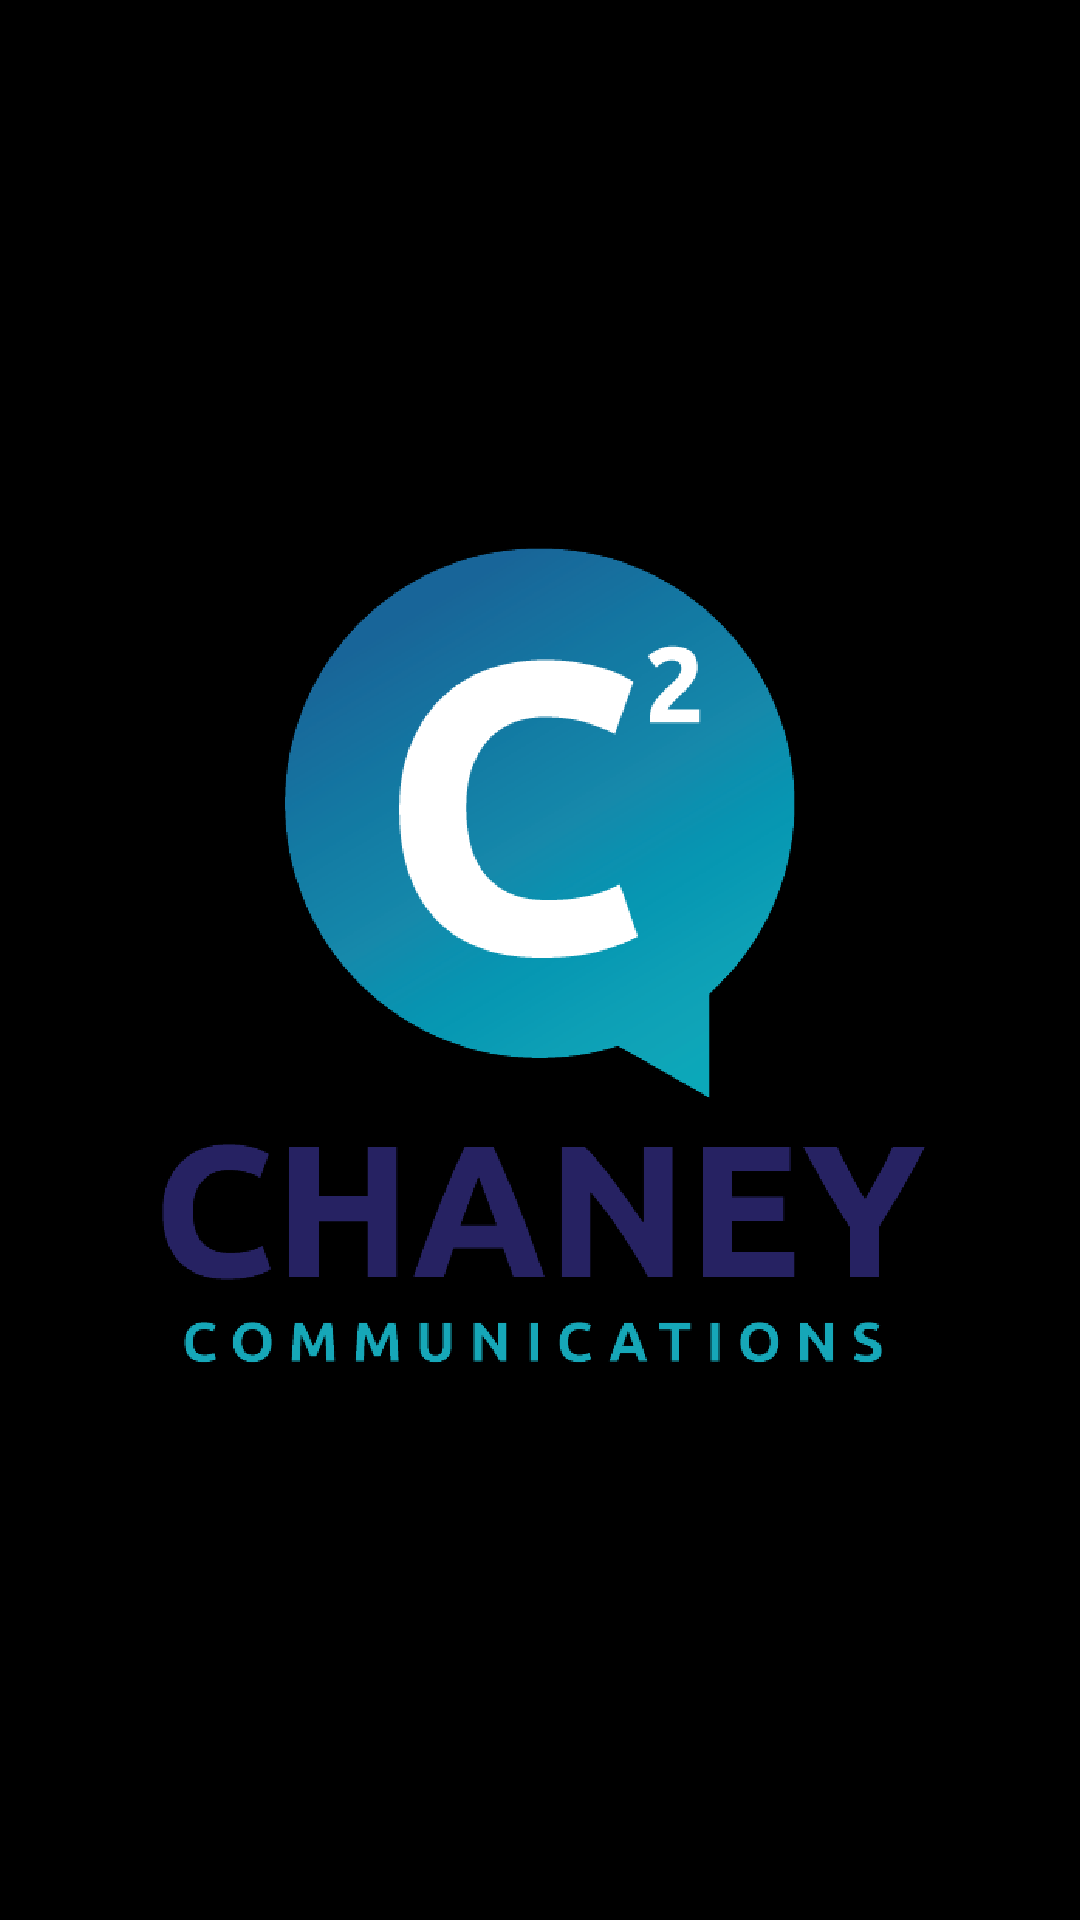 Chaney Communications